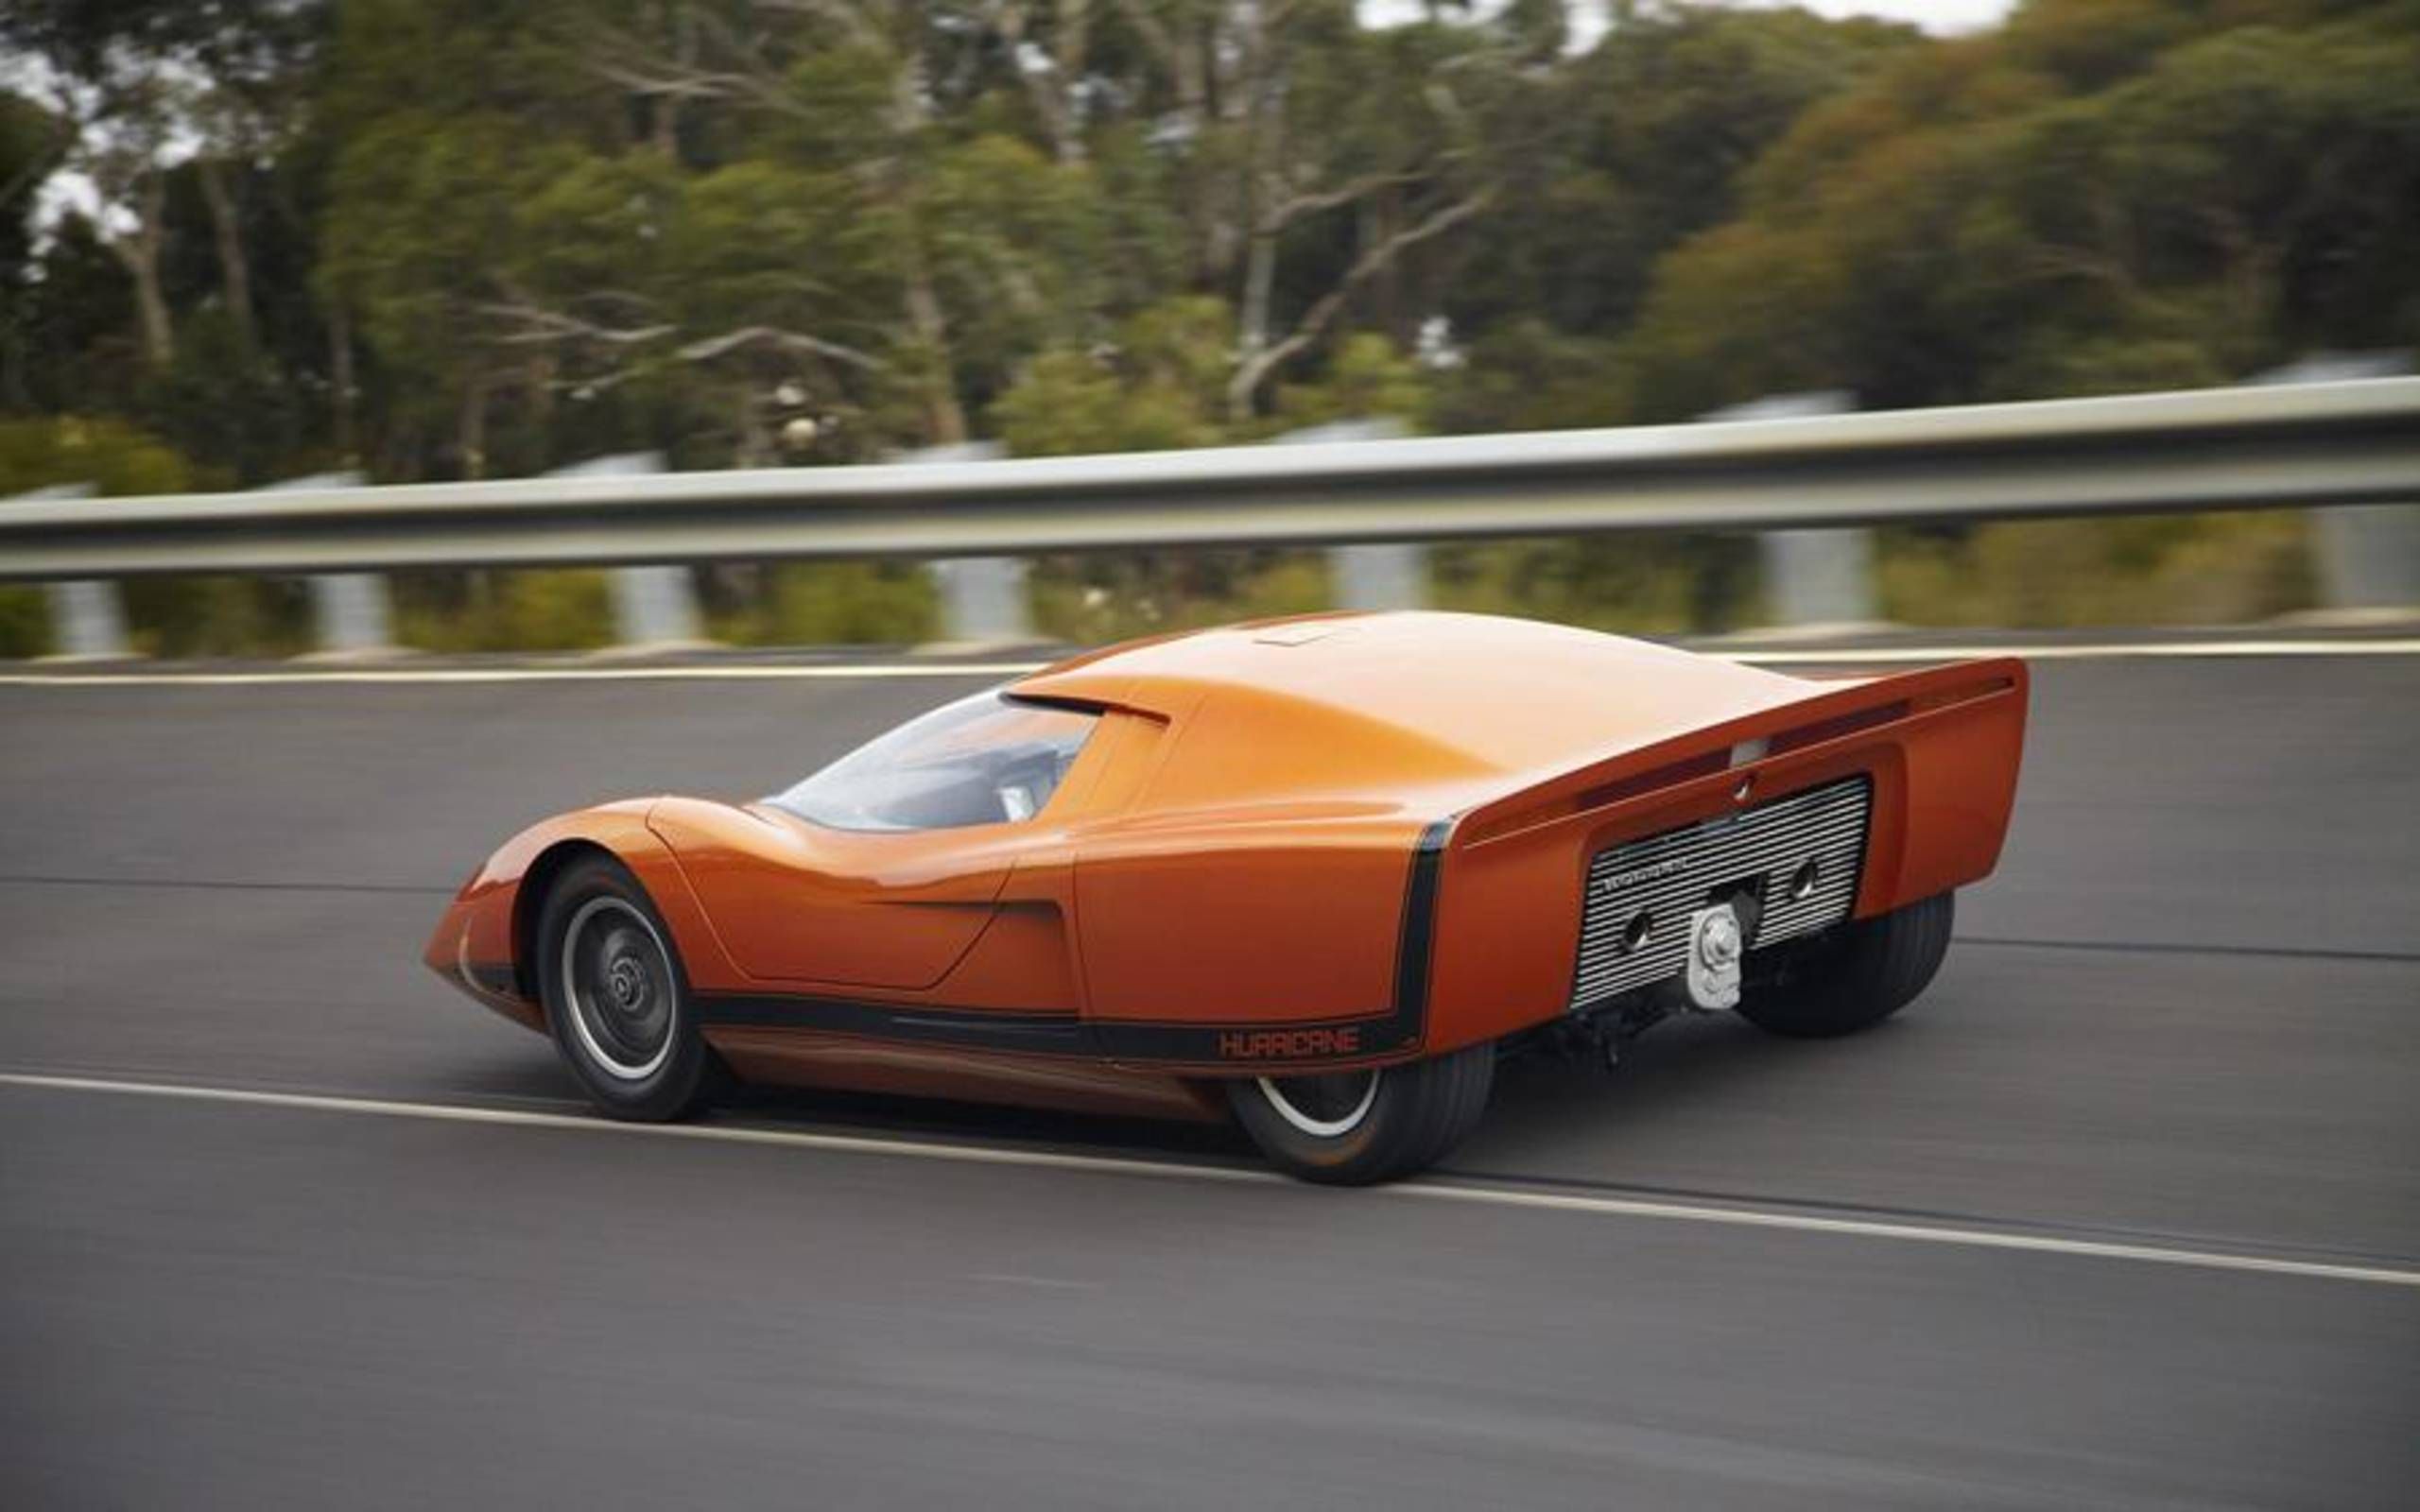 Holden restores its futuristic 1969 Hurricane concept car